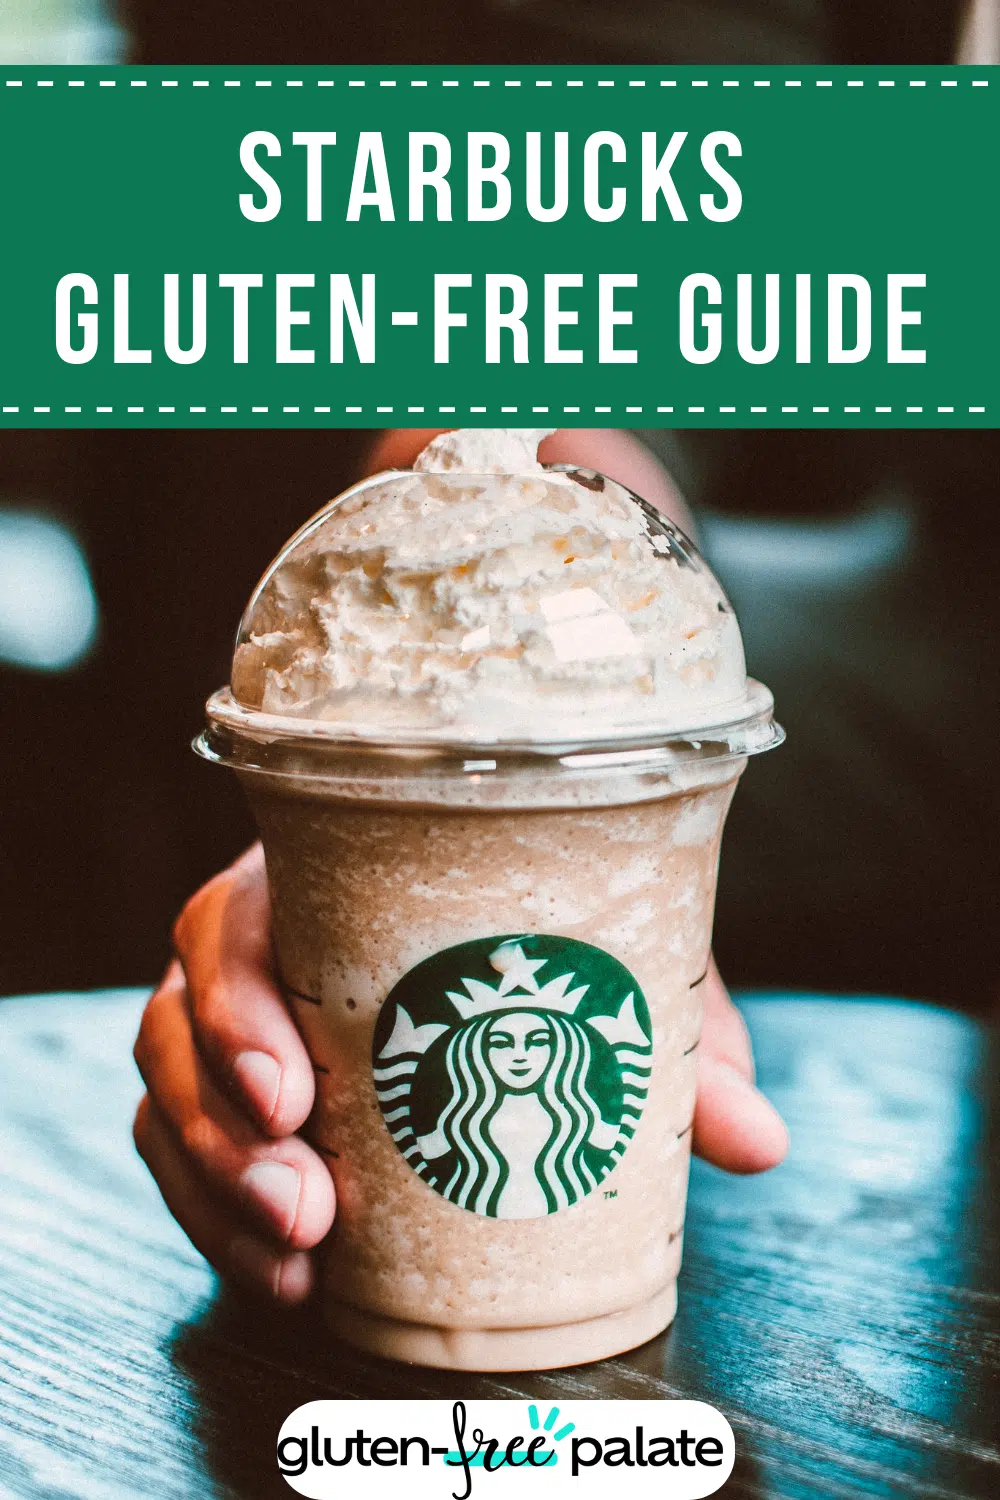 Starbucks gluten-free guide.